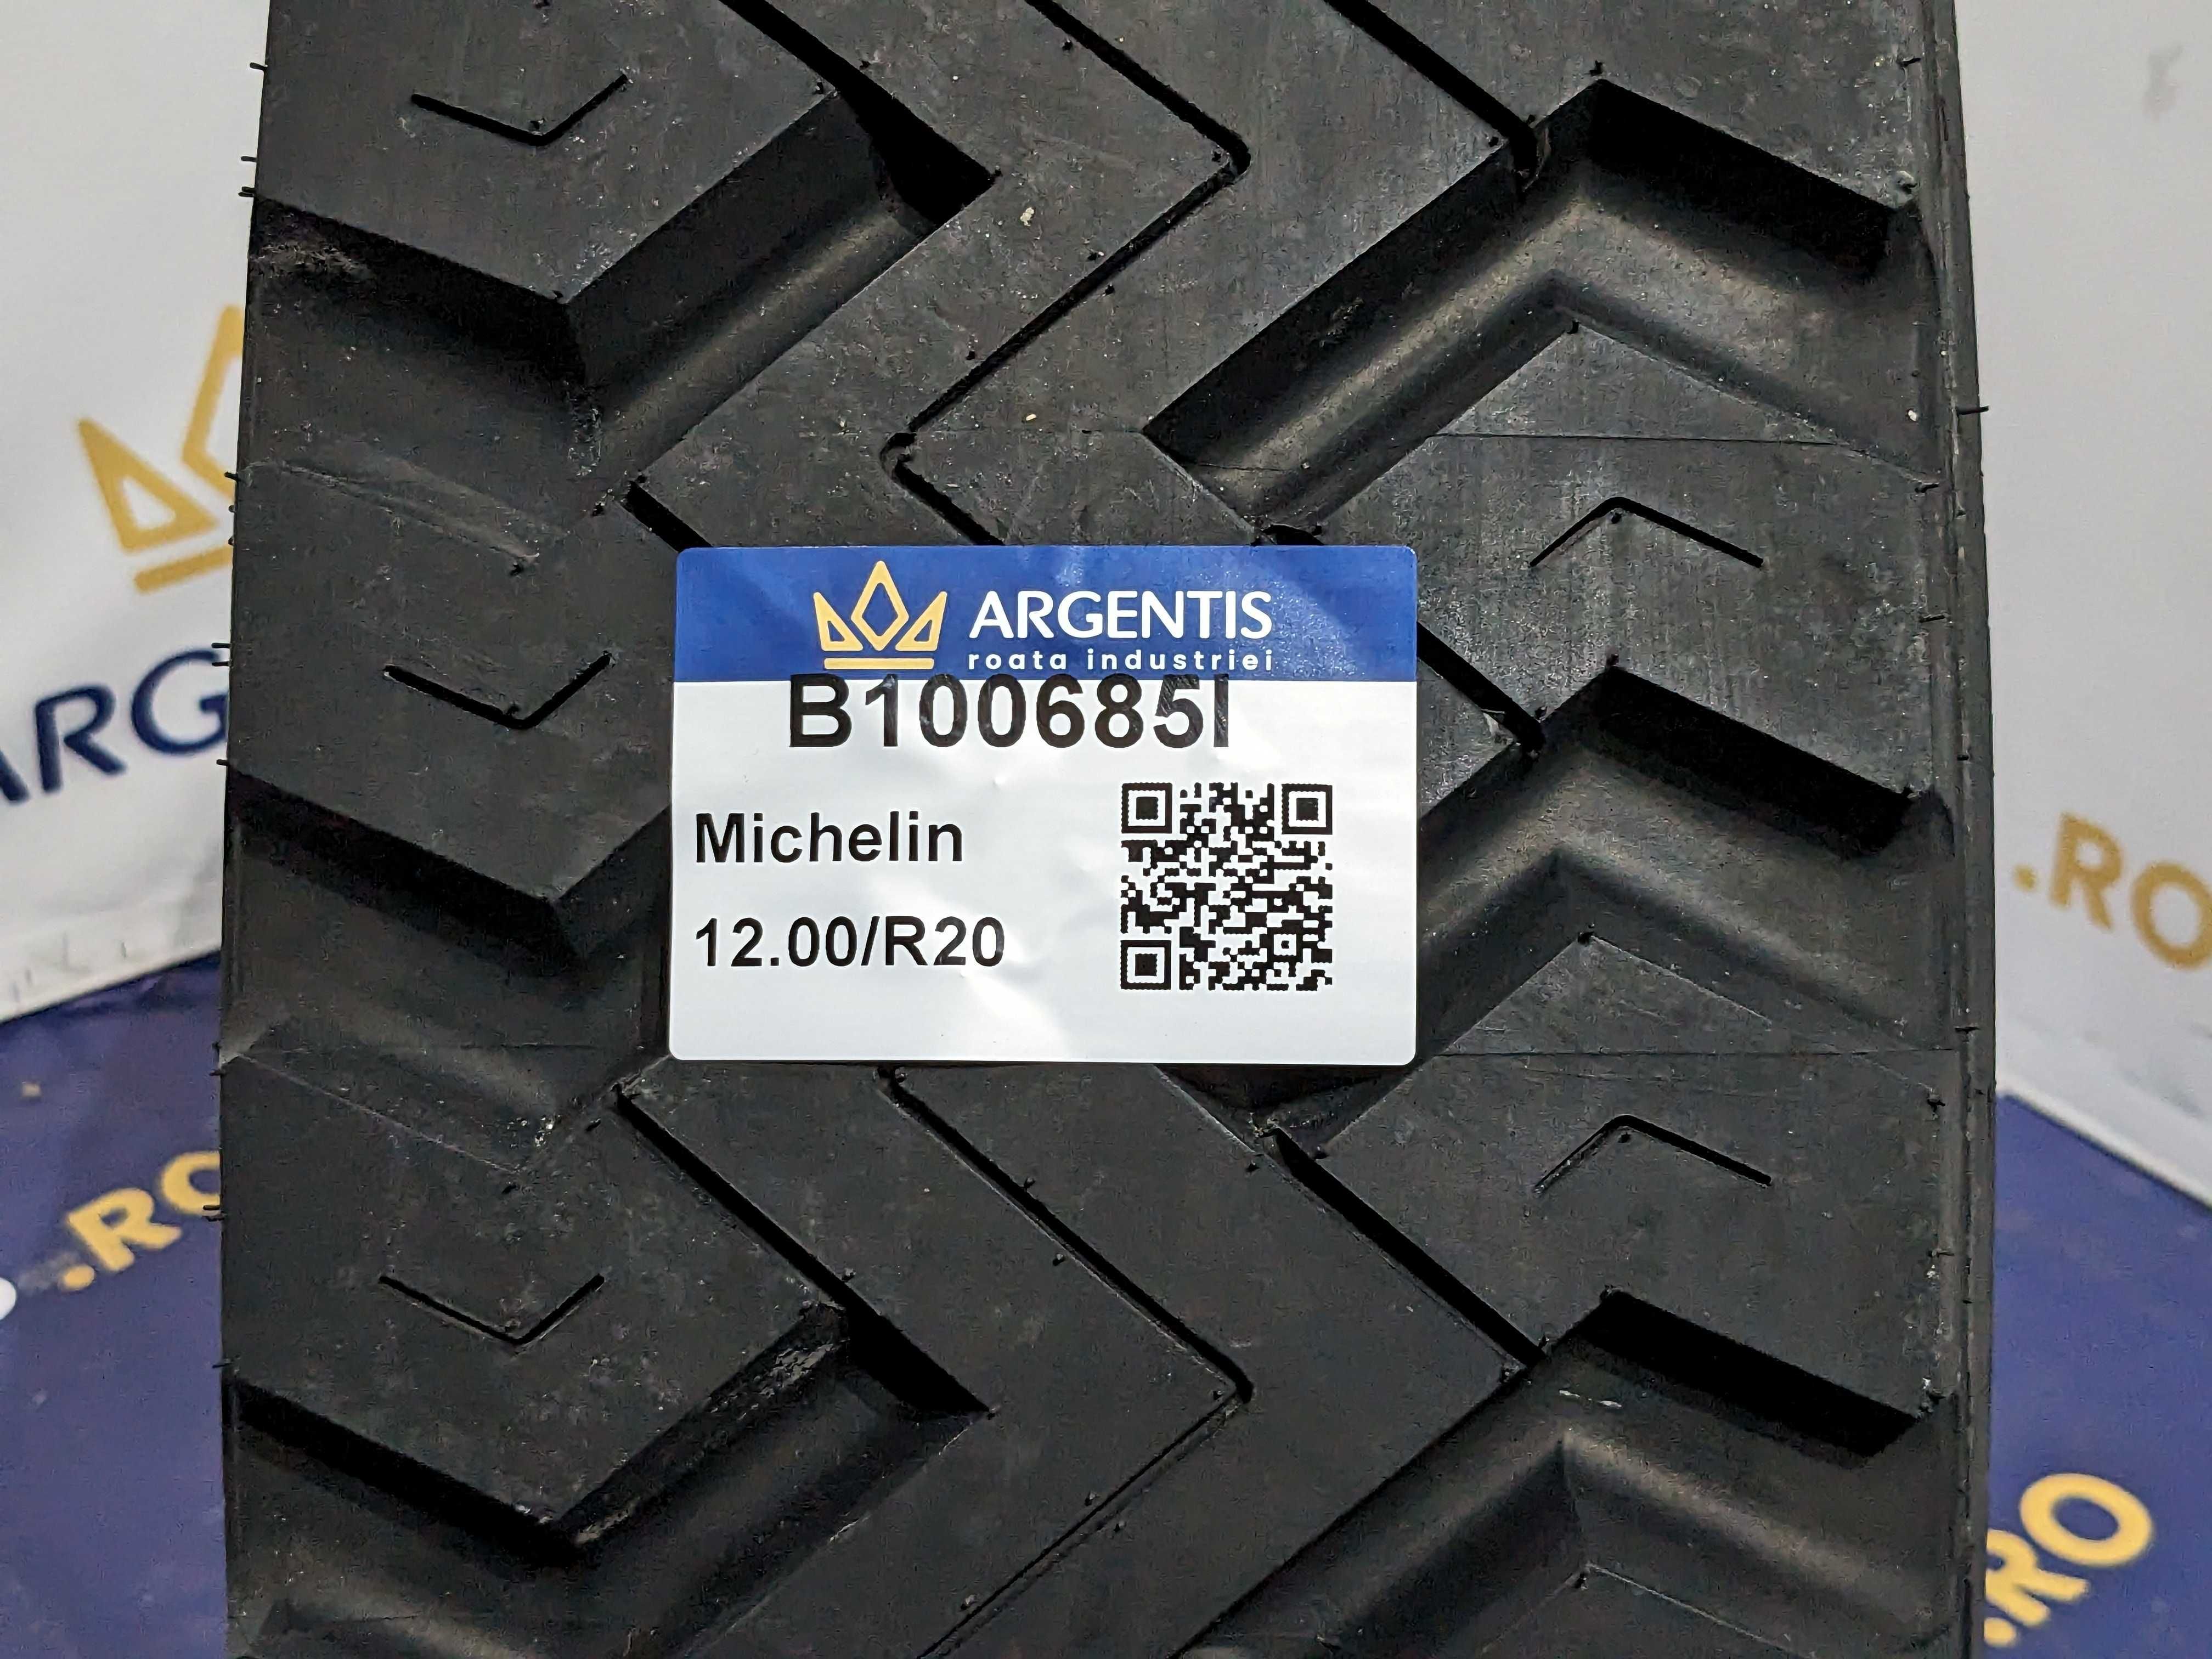 Anvelopa 12.00/R20 Michelin (cod B100685I)